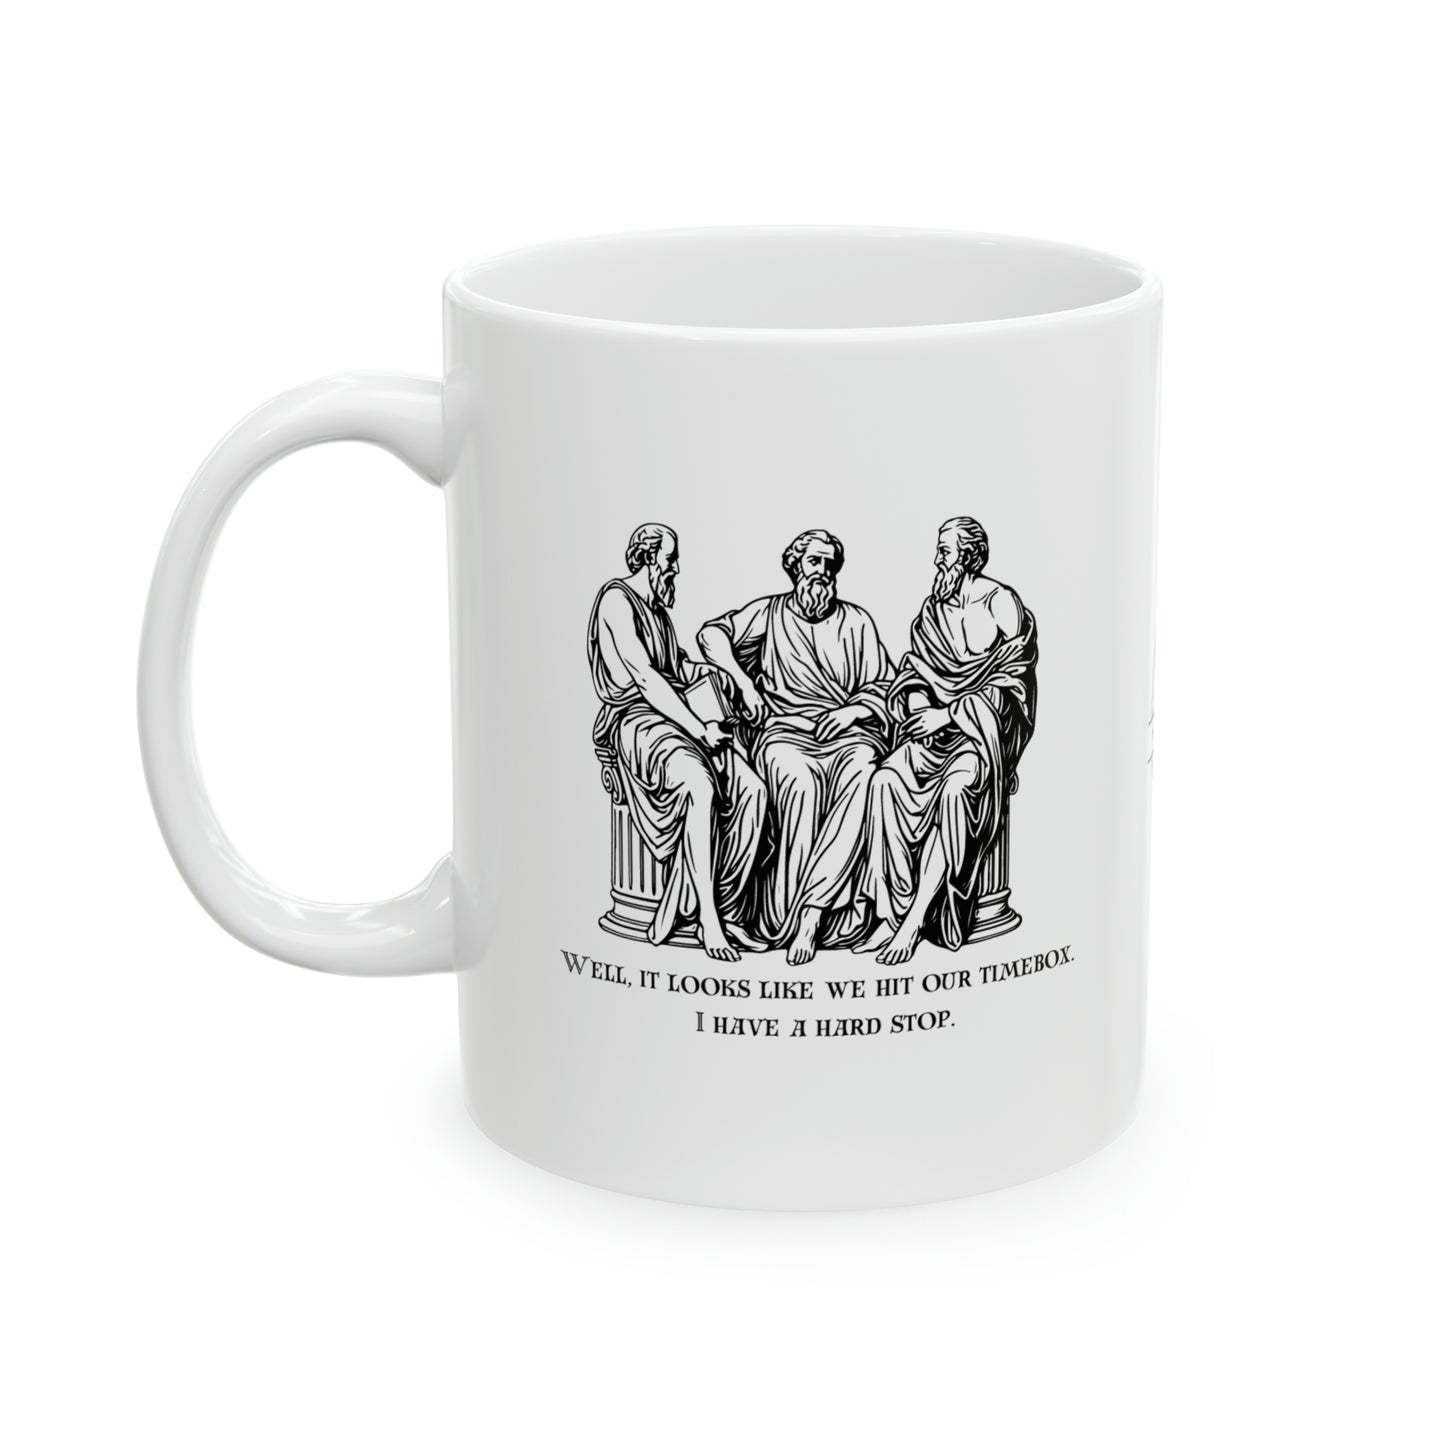 Ancient Meeting Ceramic Mug, 11oz